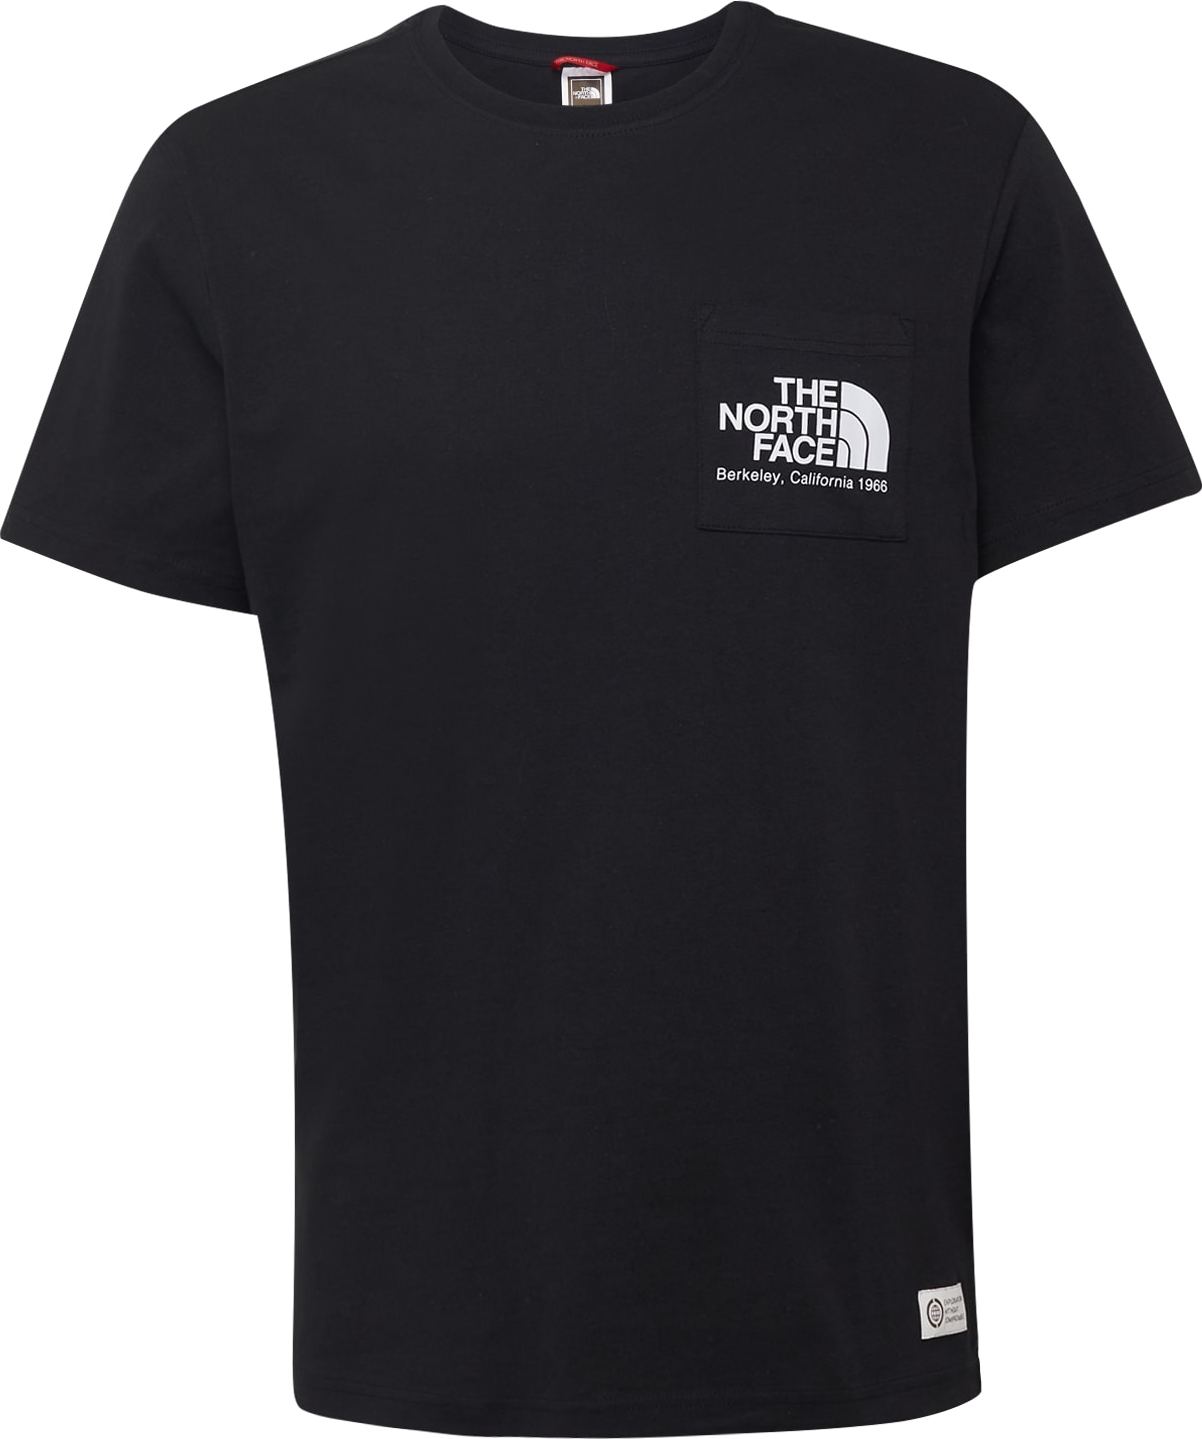 THE NORTH FACE Funkční tričko 'Berkeley California' černá / bílá